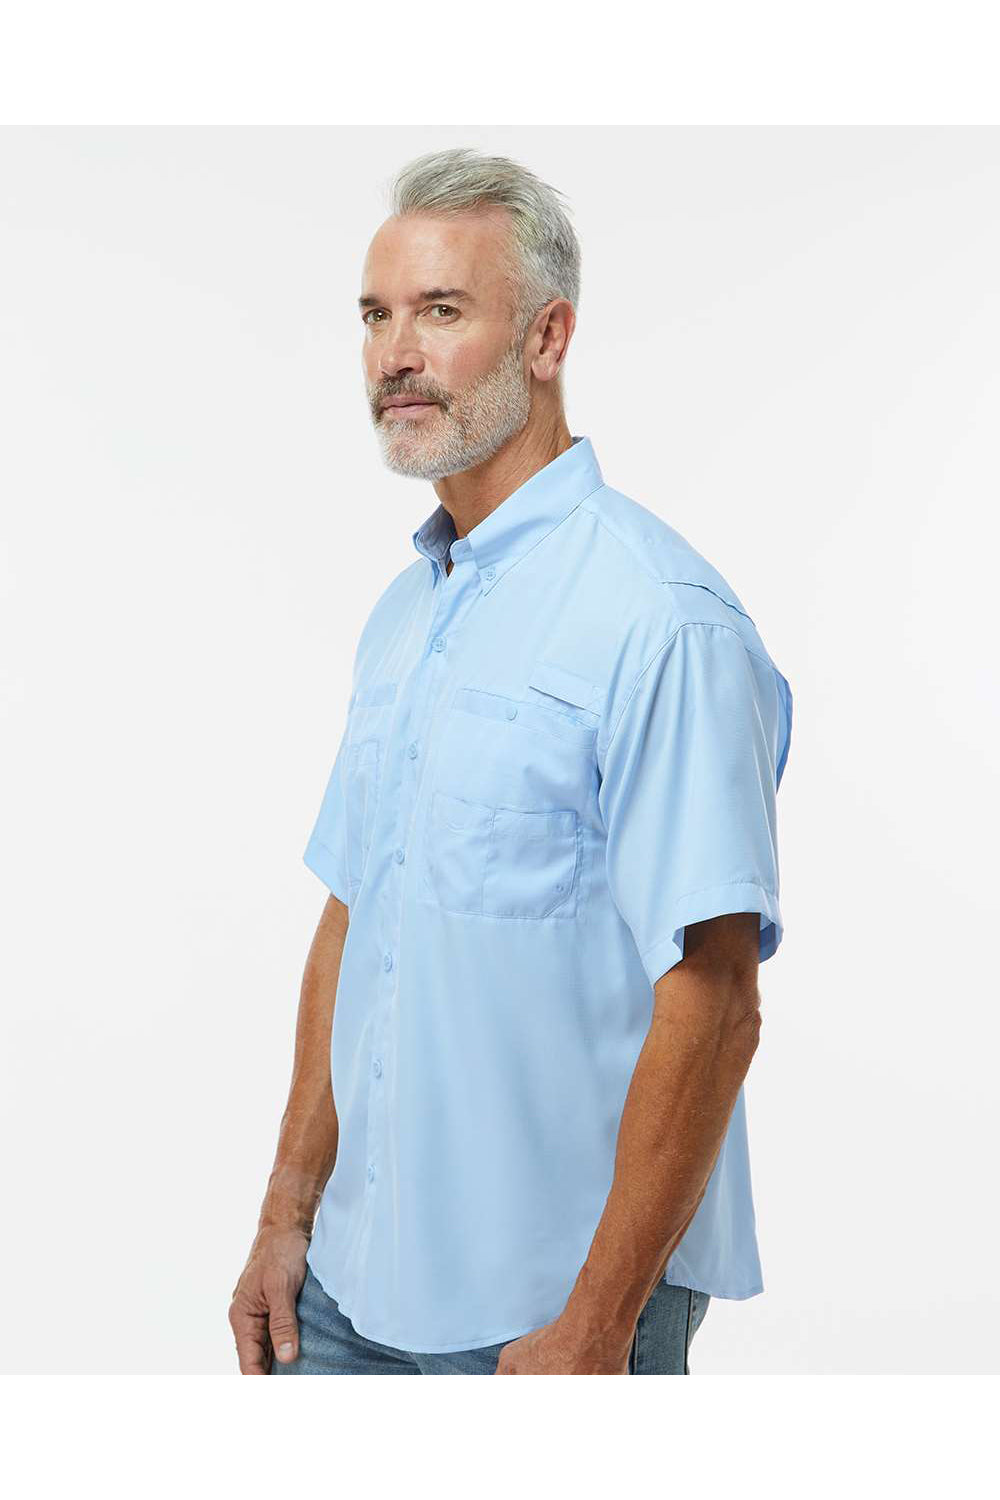 Paragon 700 Mens Hatteras Performance Short Sleeve Button Down Shirt Blue Mist Model Side